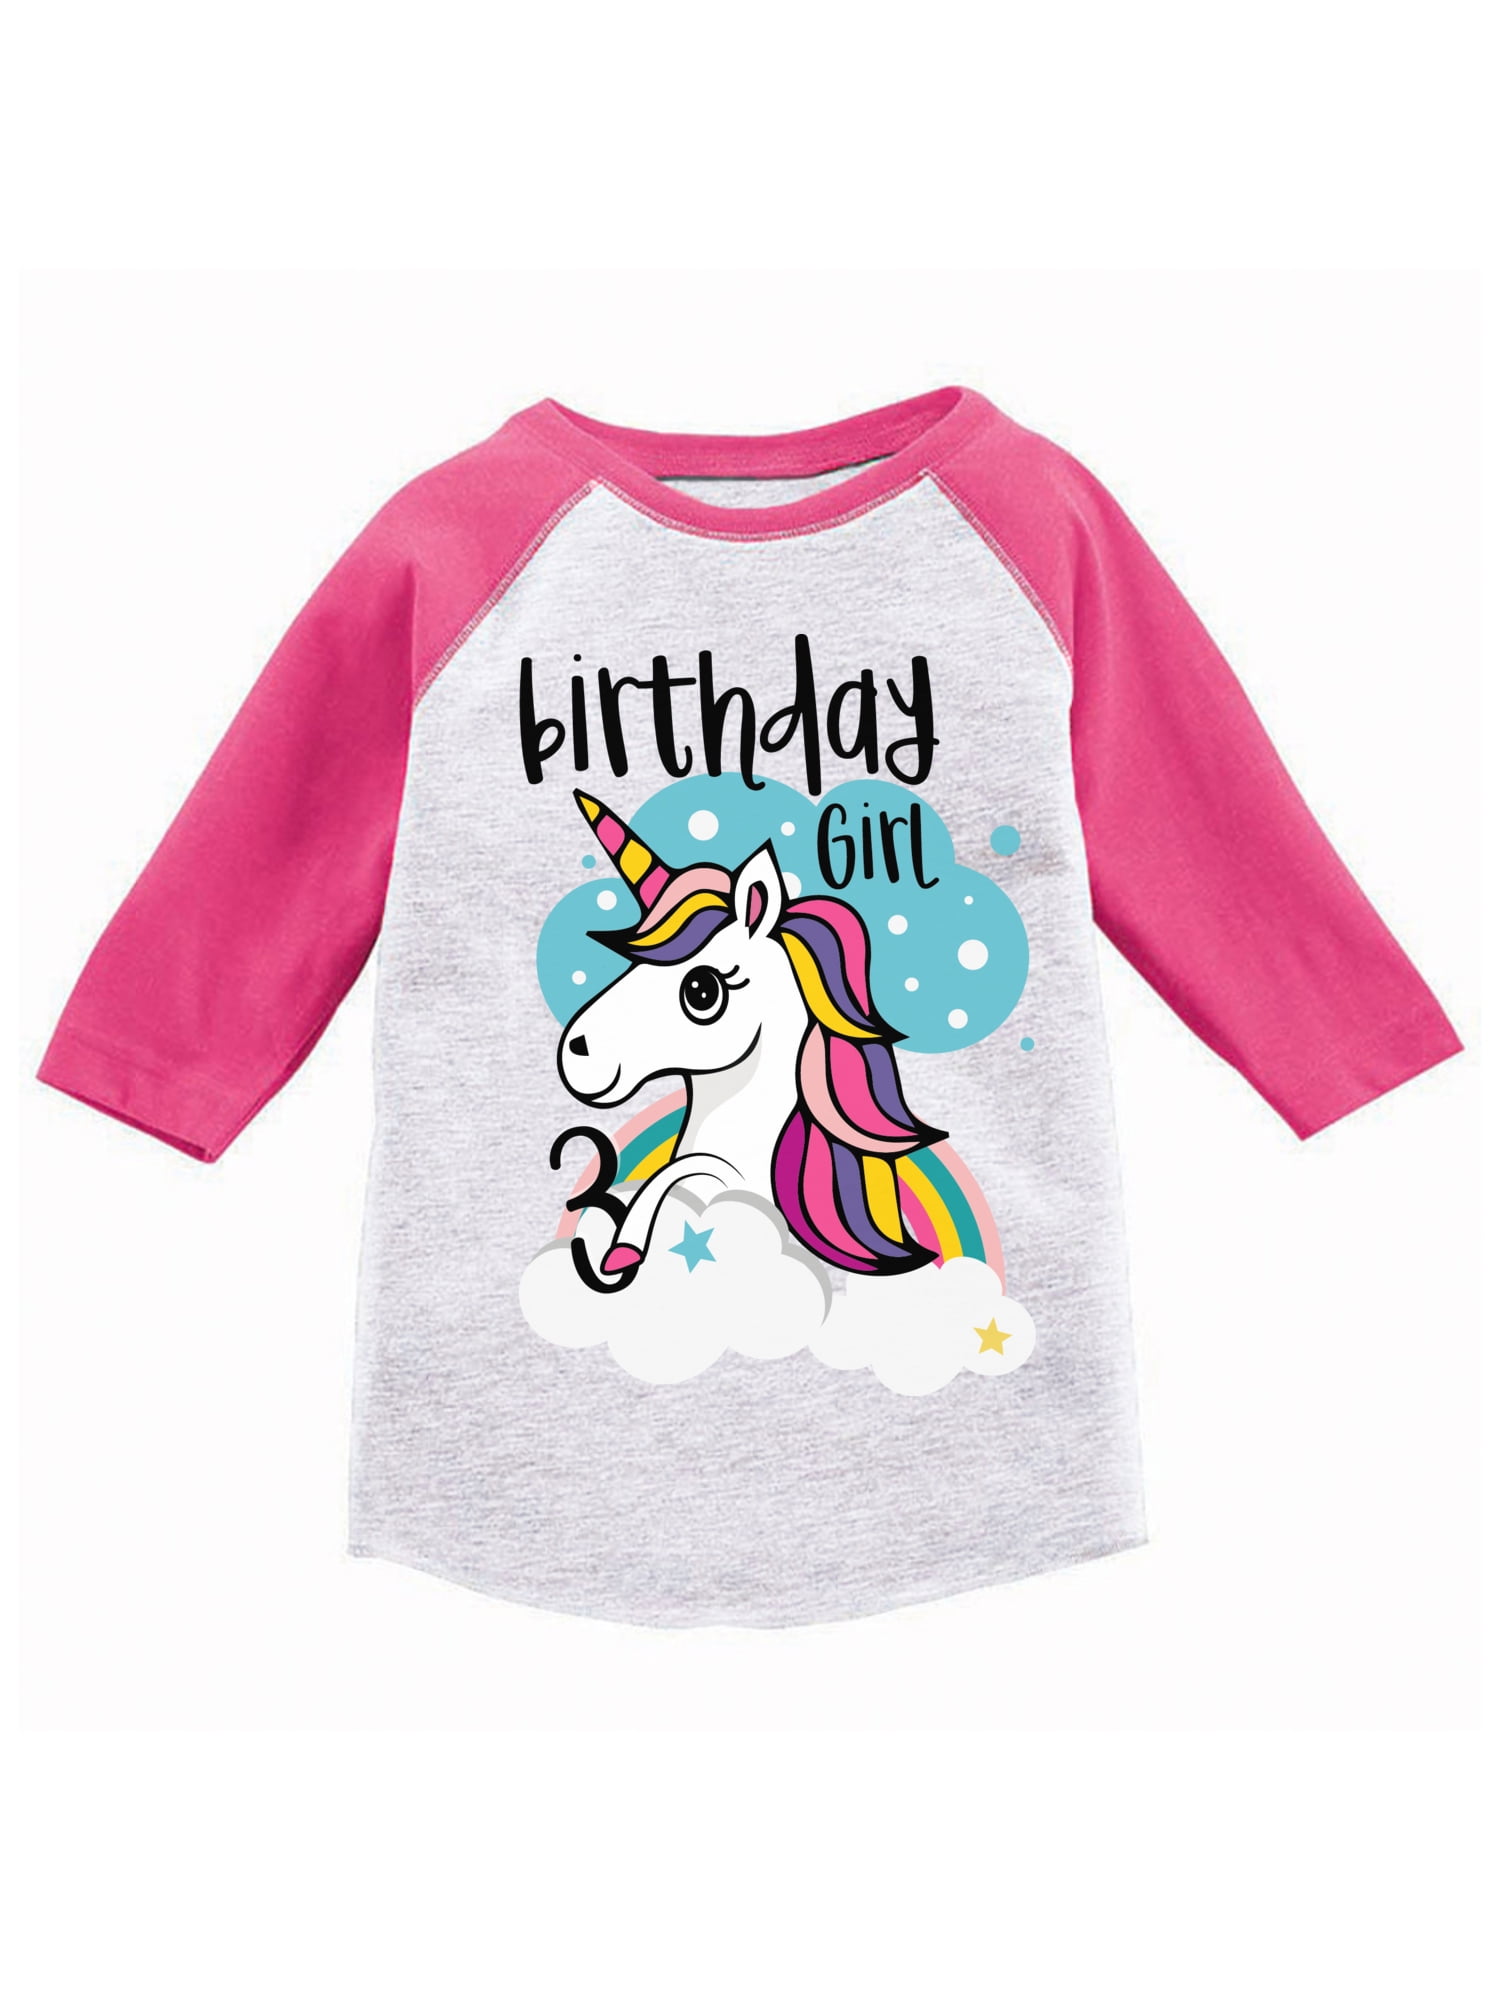 3rd Birthday Girl Outfit Unicorn 3 Year Old Toddler Third Birthday Girl Shirt 3t 